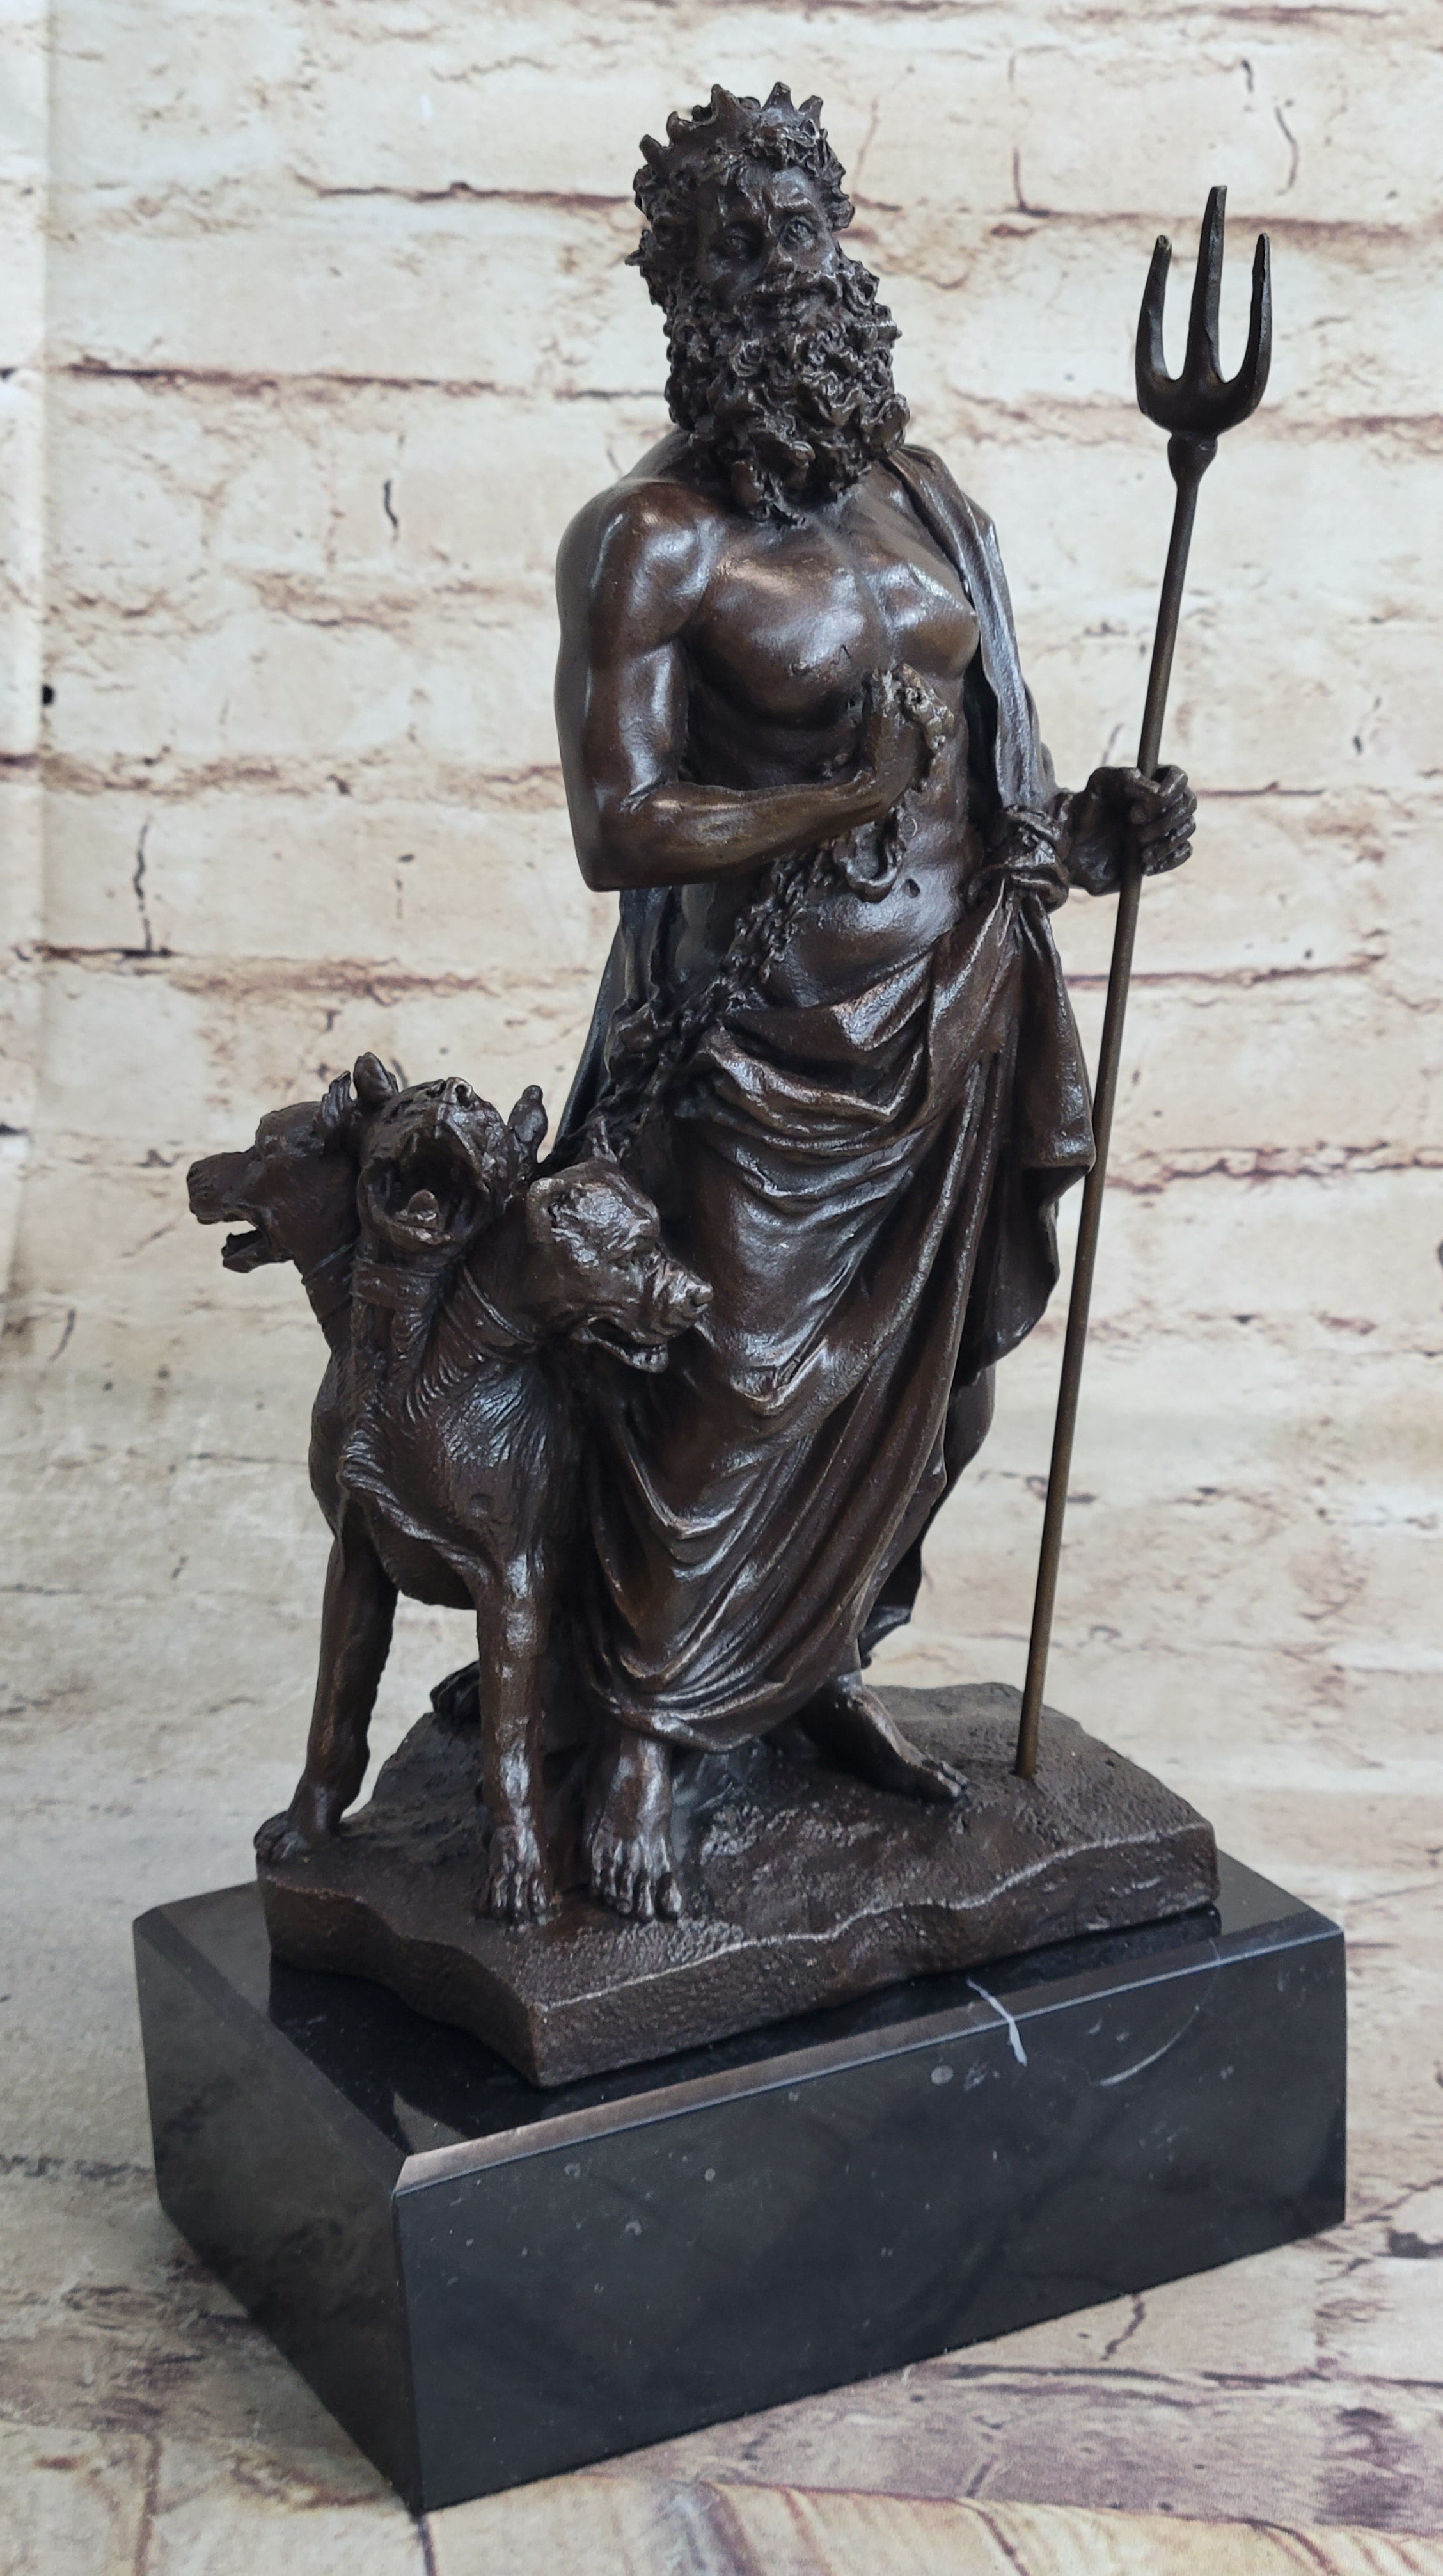 Signed Greek God Pluto With Dog Hot Cast Bronze Sculpture Statue Figure Figurine